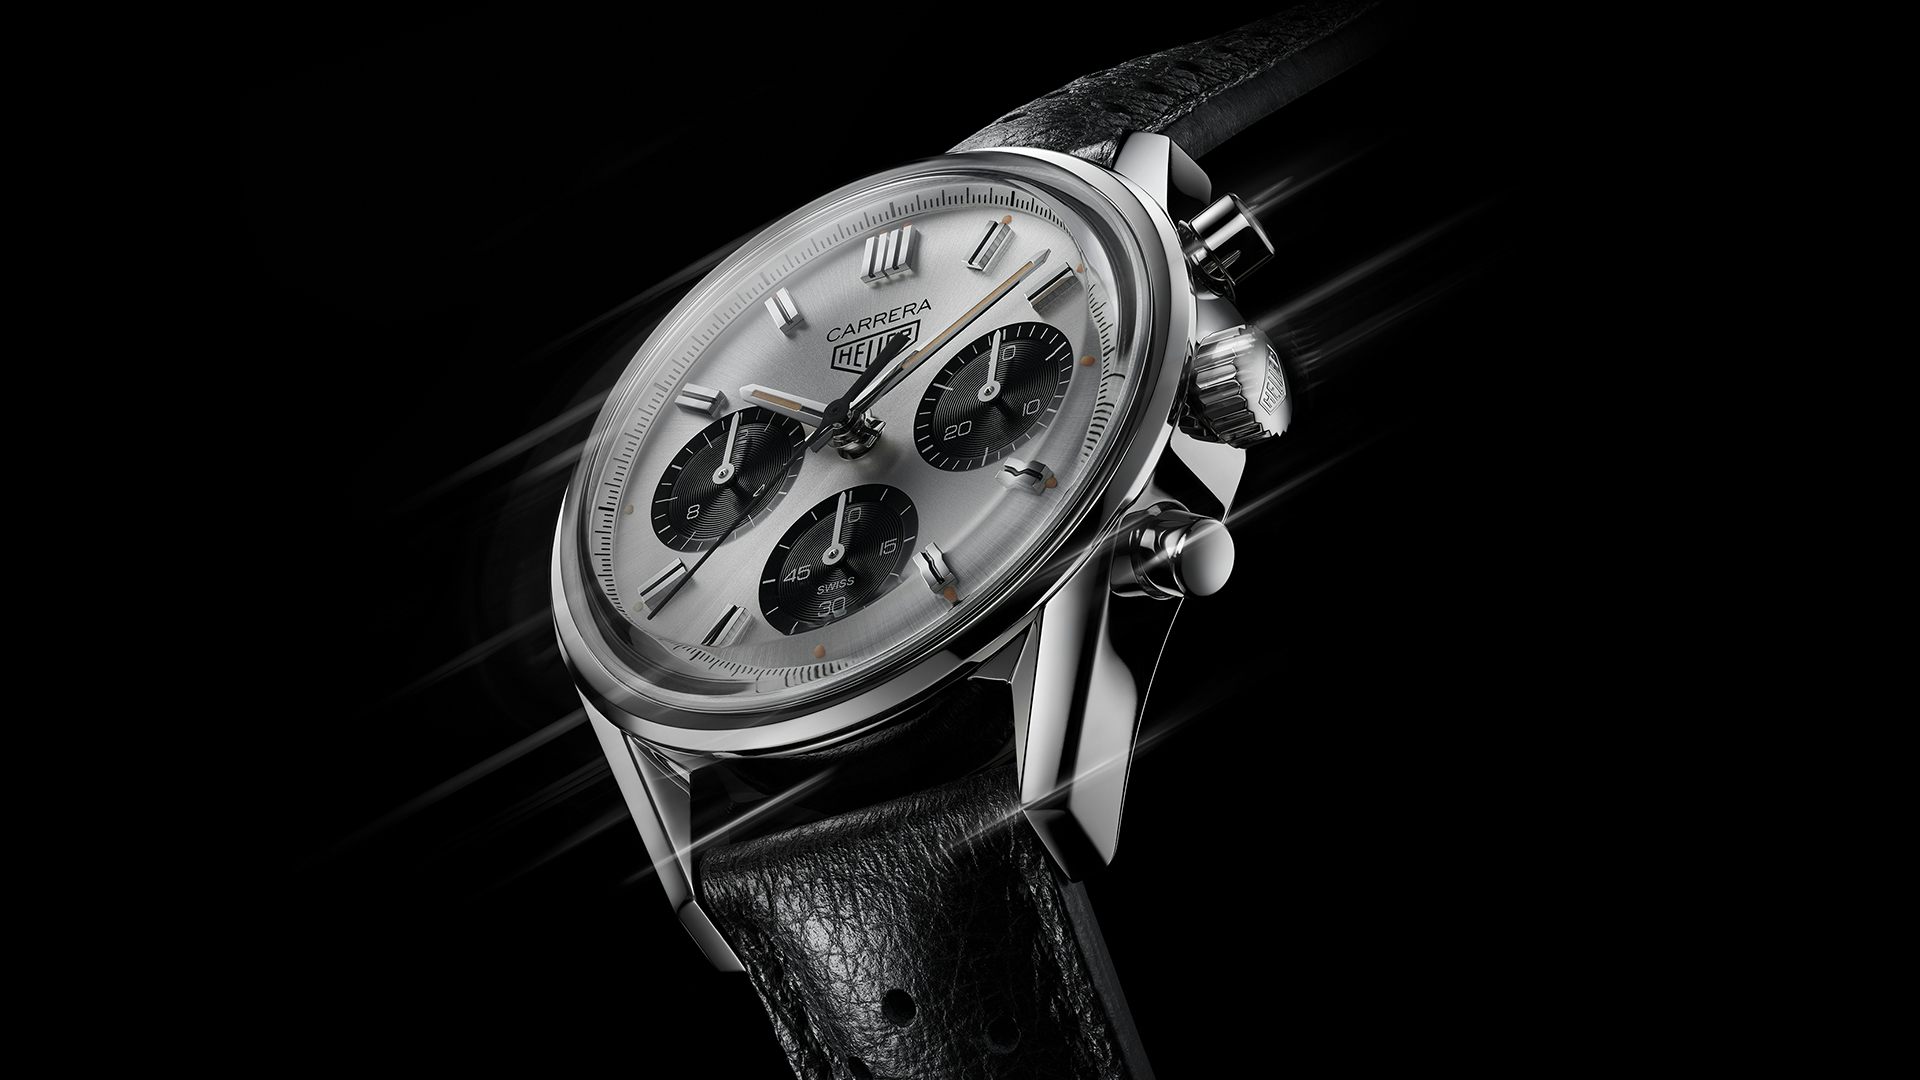 The TAG Heuer Carrera 60th Anniversary Chronograph